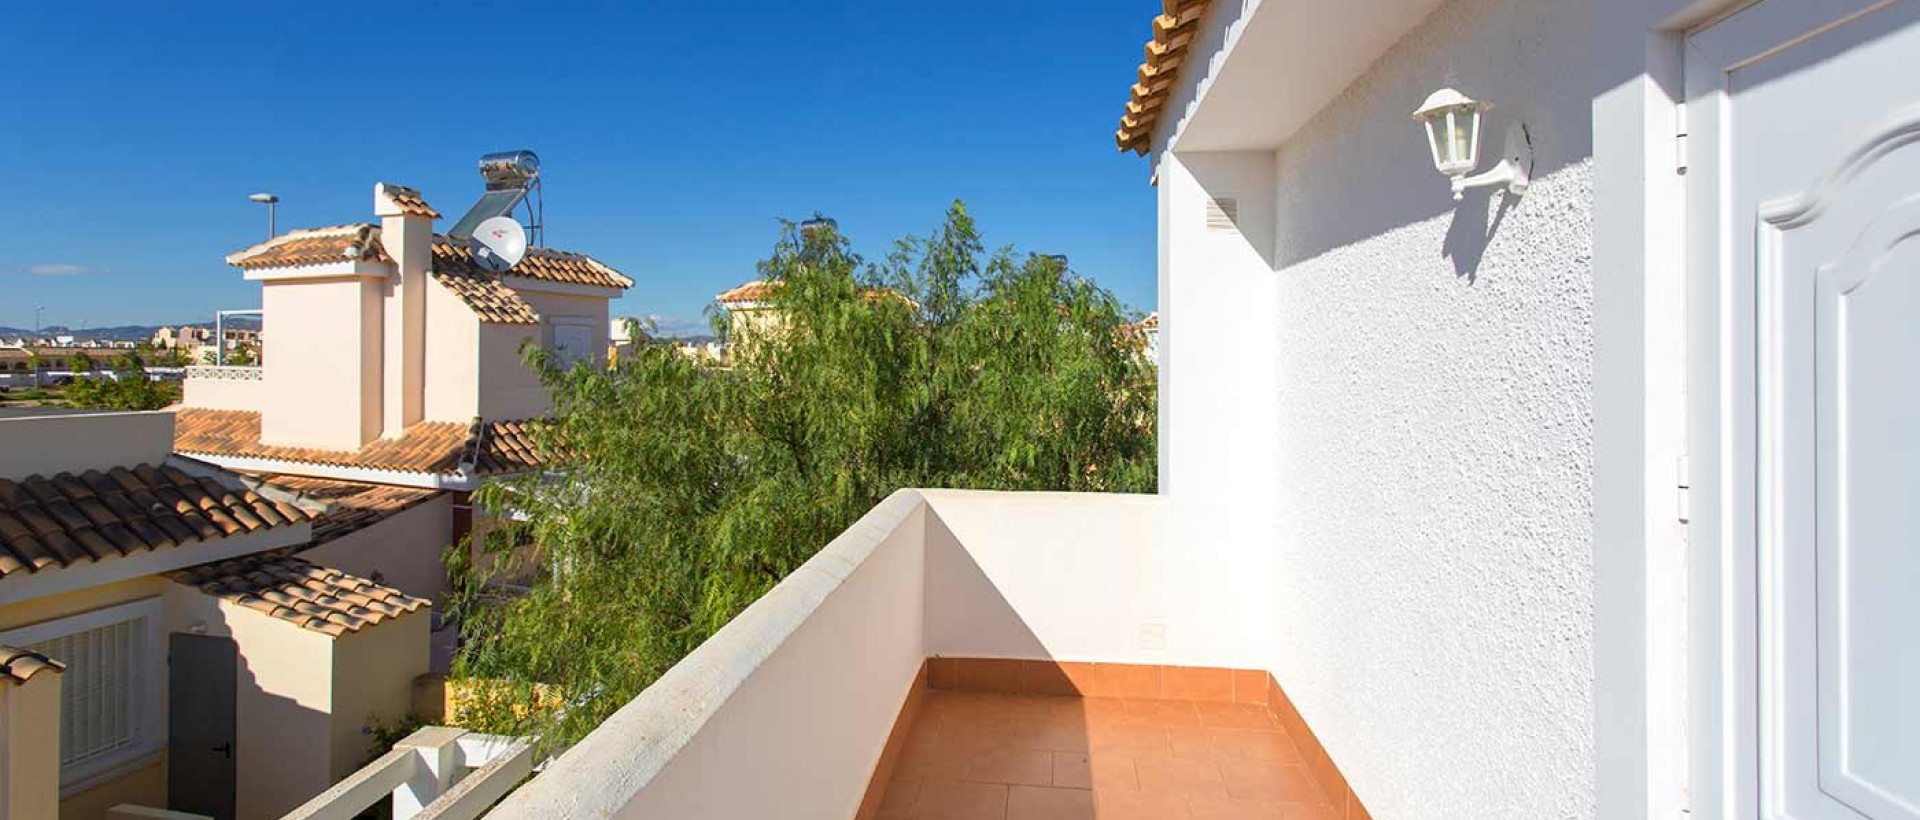 Villa de style espagnol à vendre sur New Sierra Golf à Balsicas, Torre-Pacheco, Costa Calida